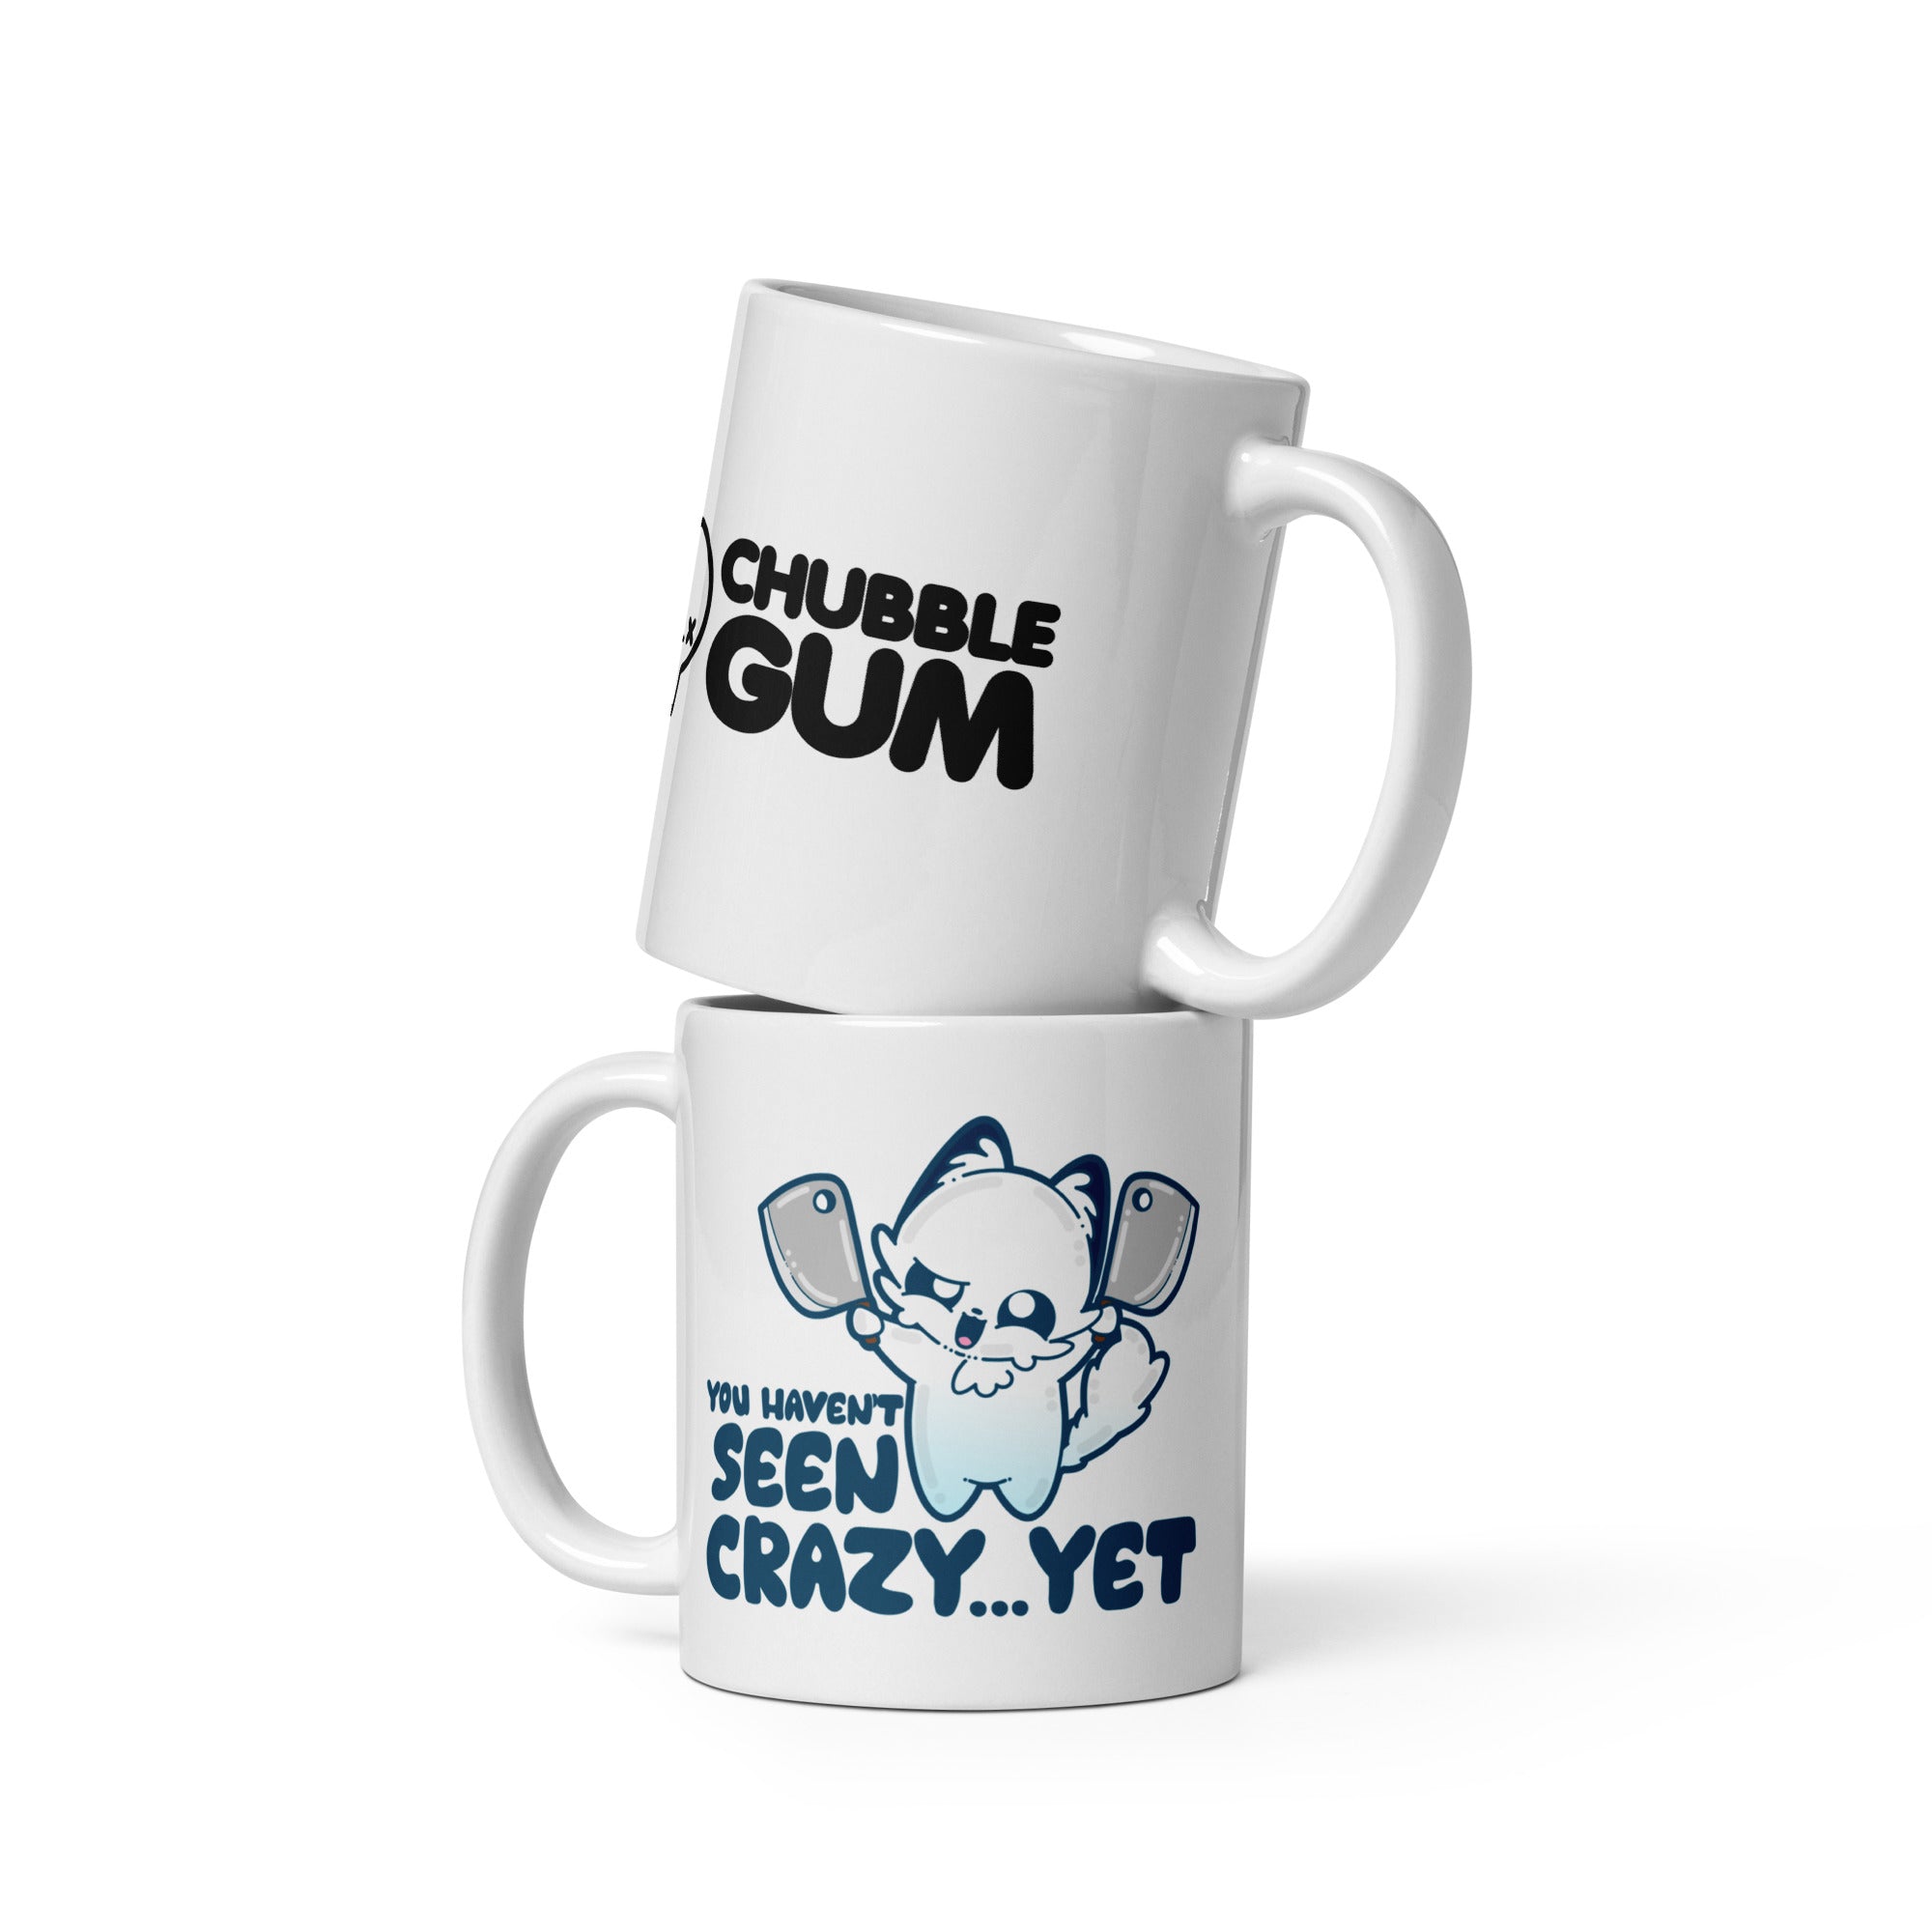 YOU HAVENT SEEN CRAZY… YET - Coffee Mug - ChubbleGumLLC